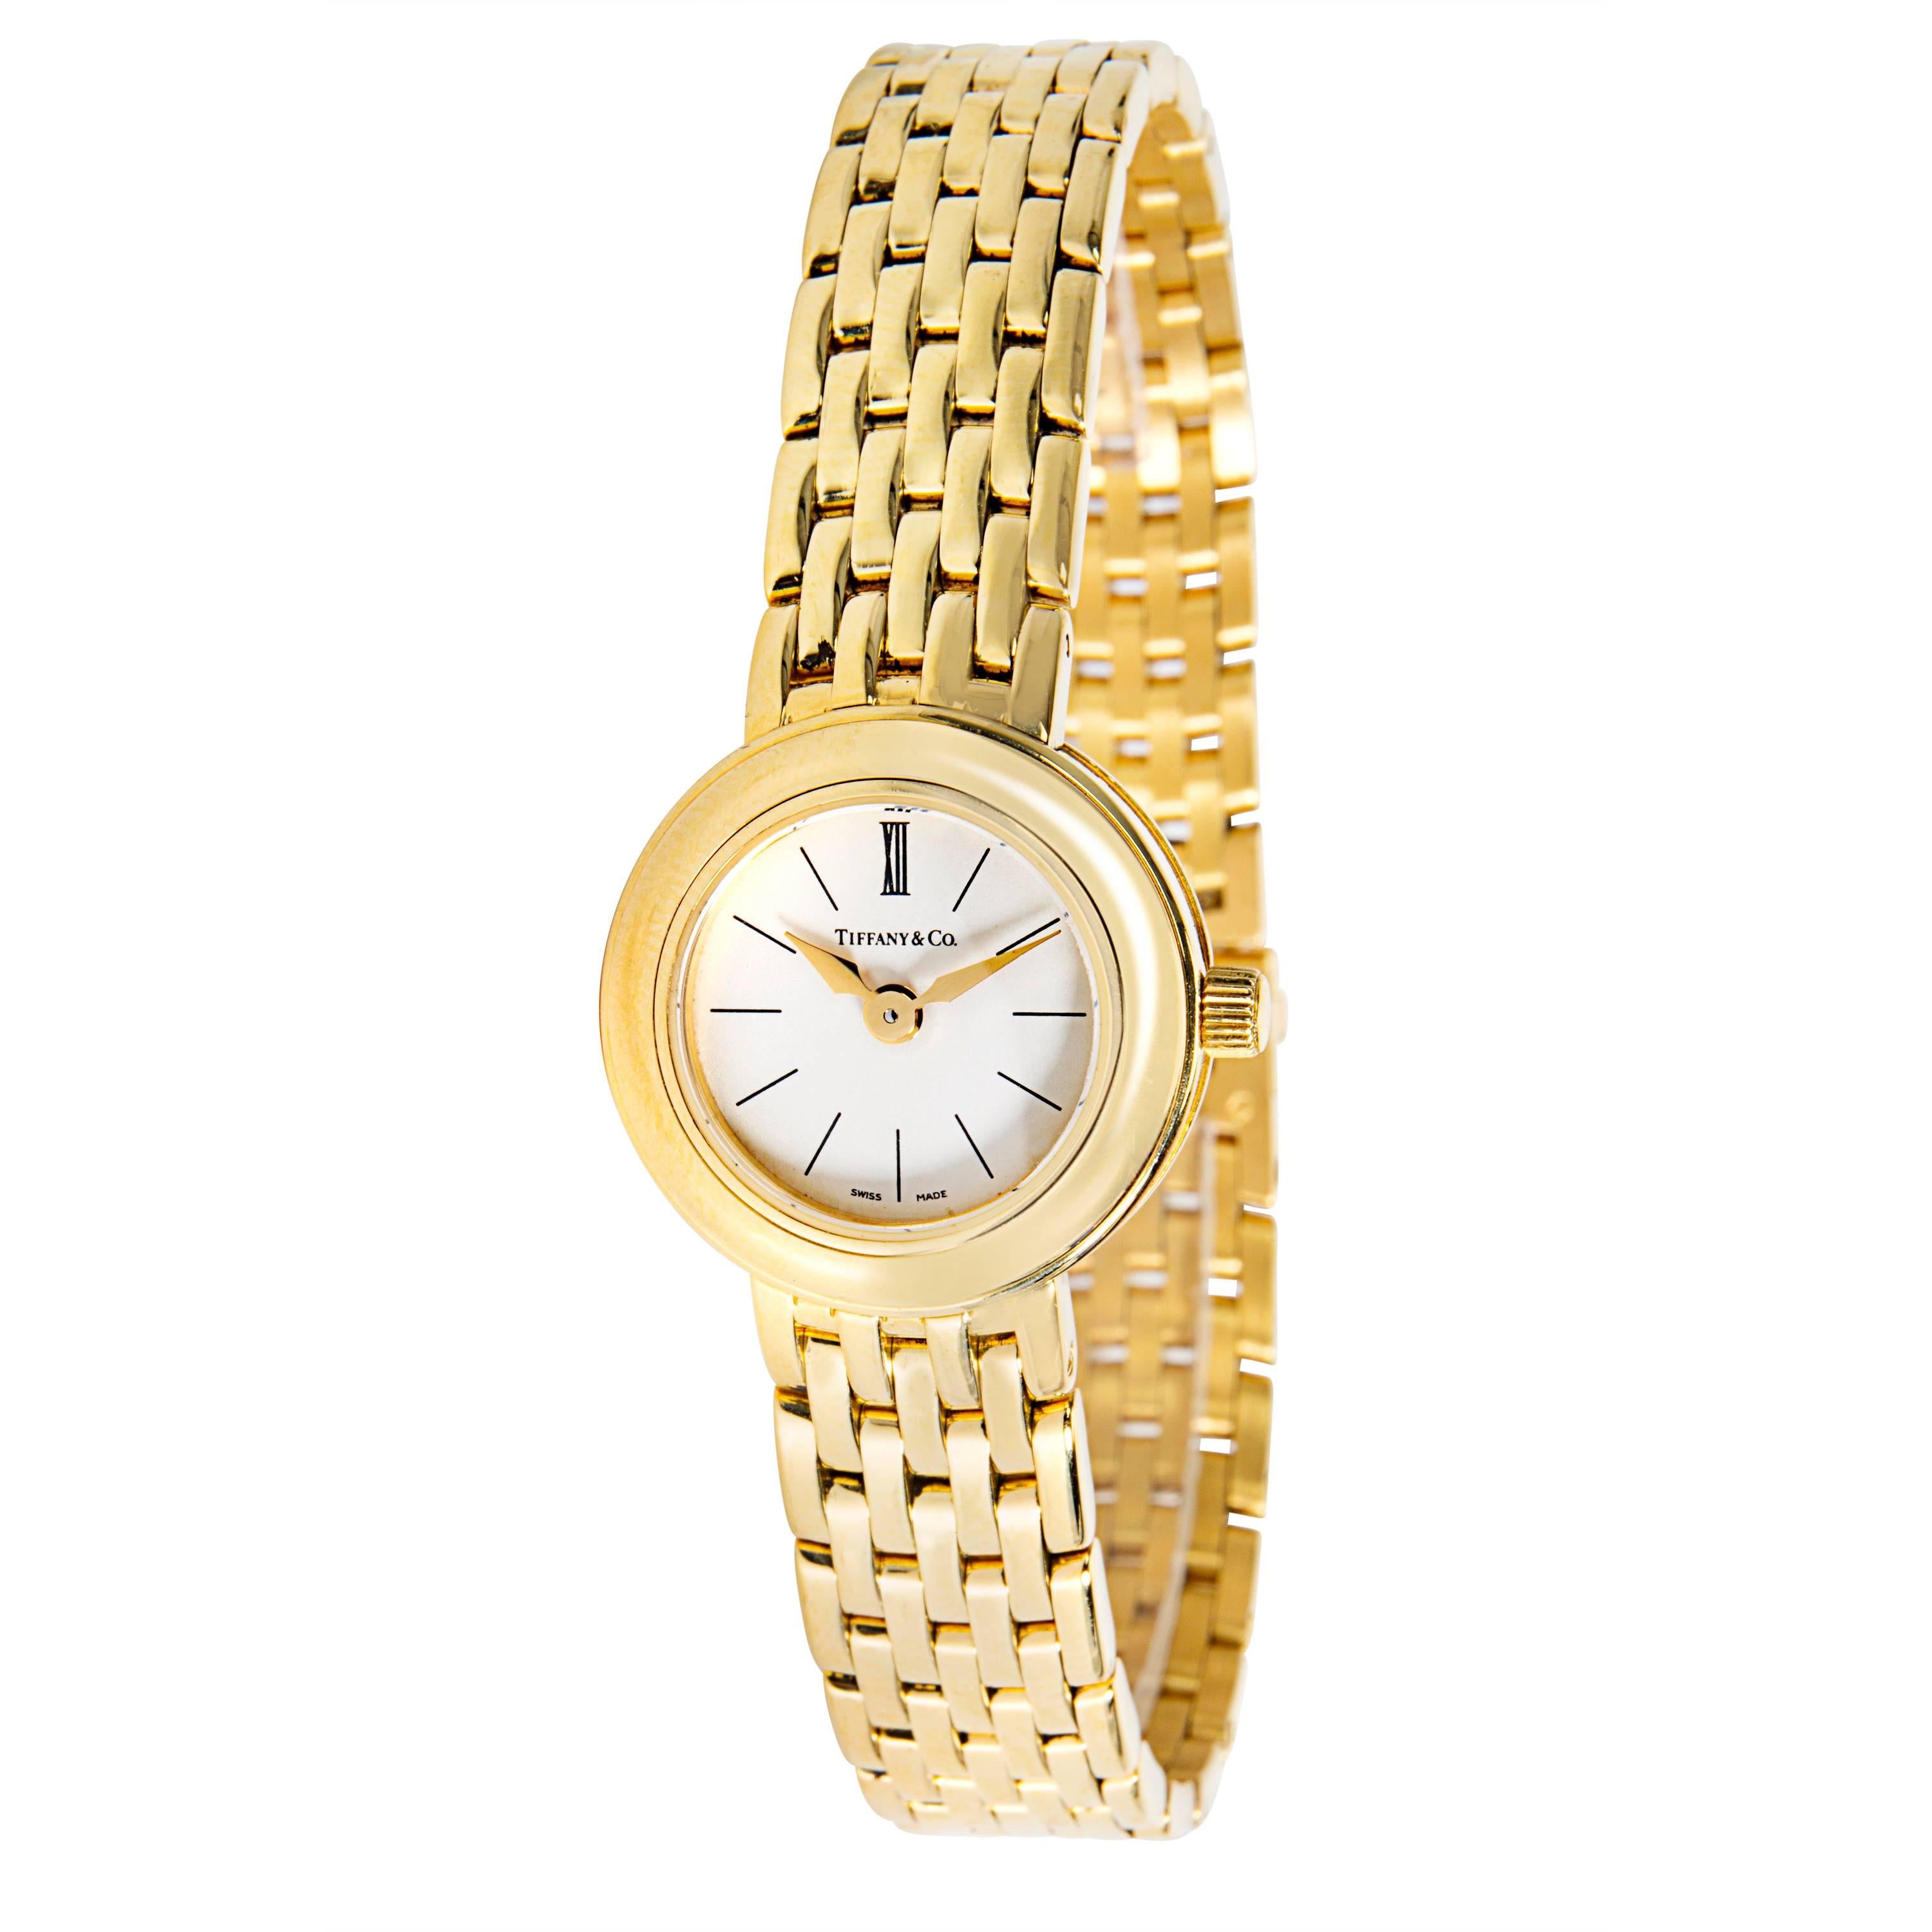 Tiffany & Co. Portfolio Women's Watch in Yellow Gold